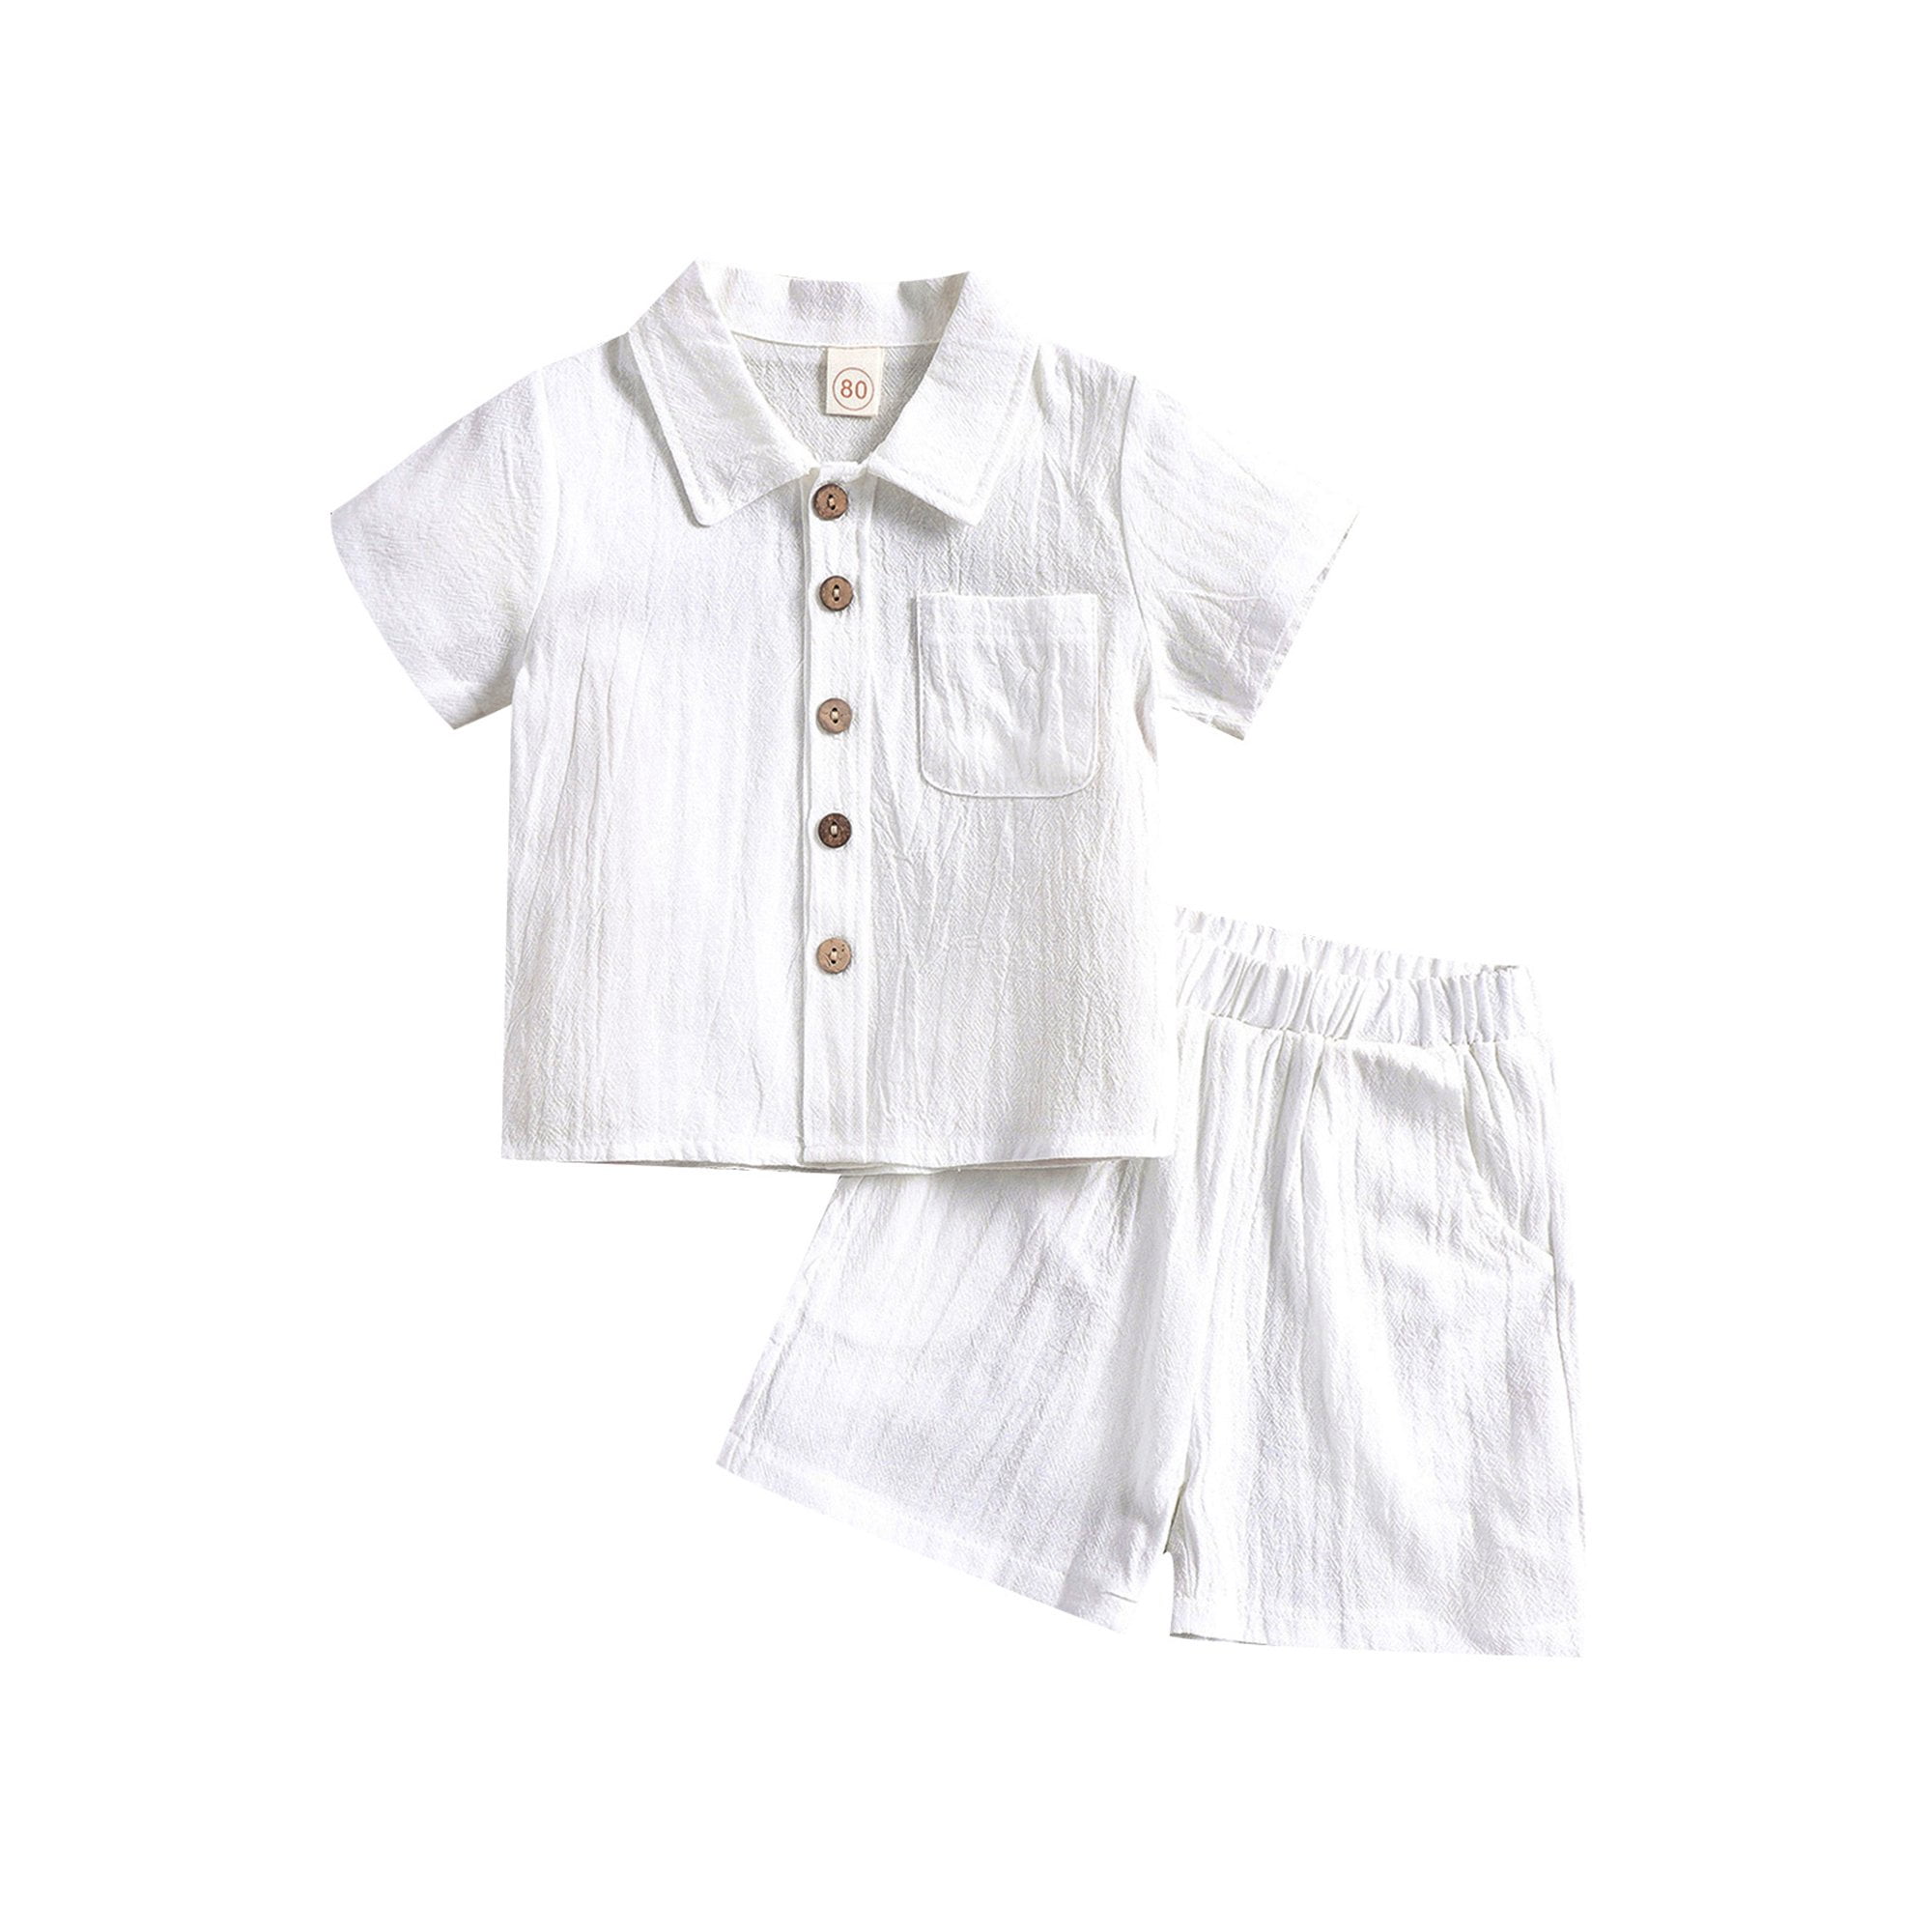 Baby Suits Kids Boys Formal Suit Weddings Vest+Shirt +Necktie +Shorts Party  Sets | eBay